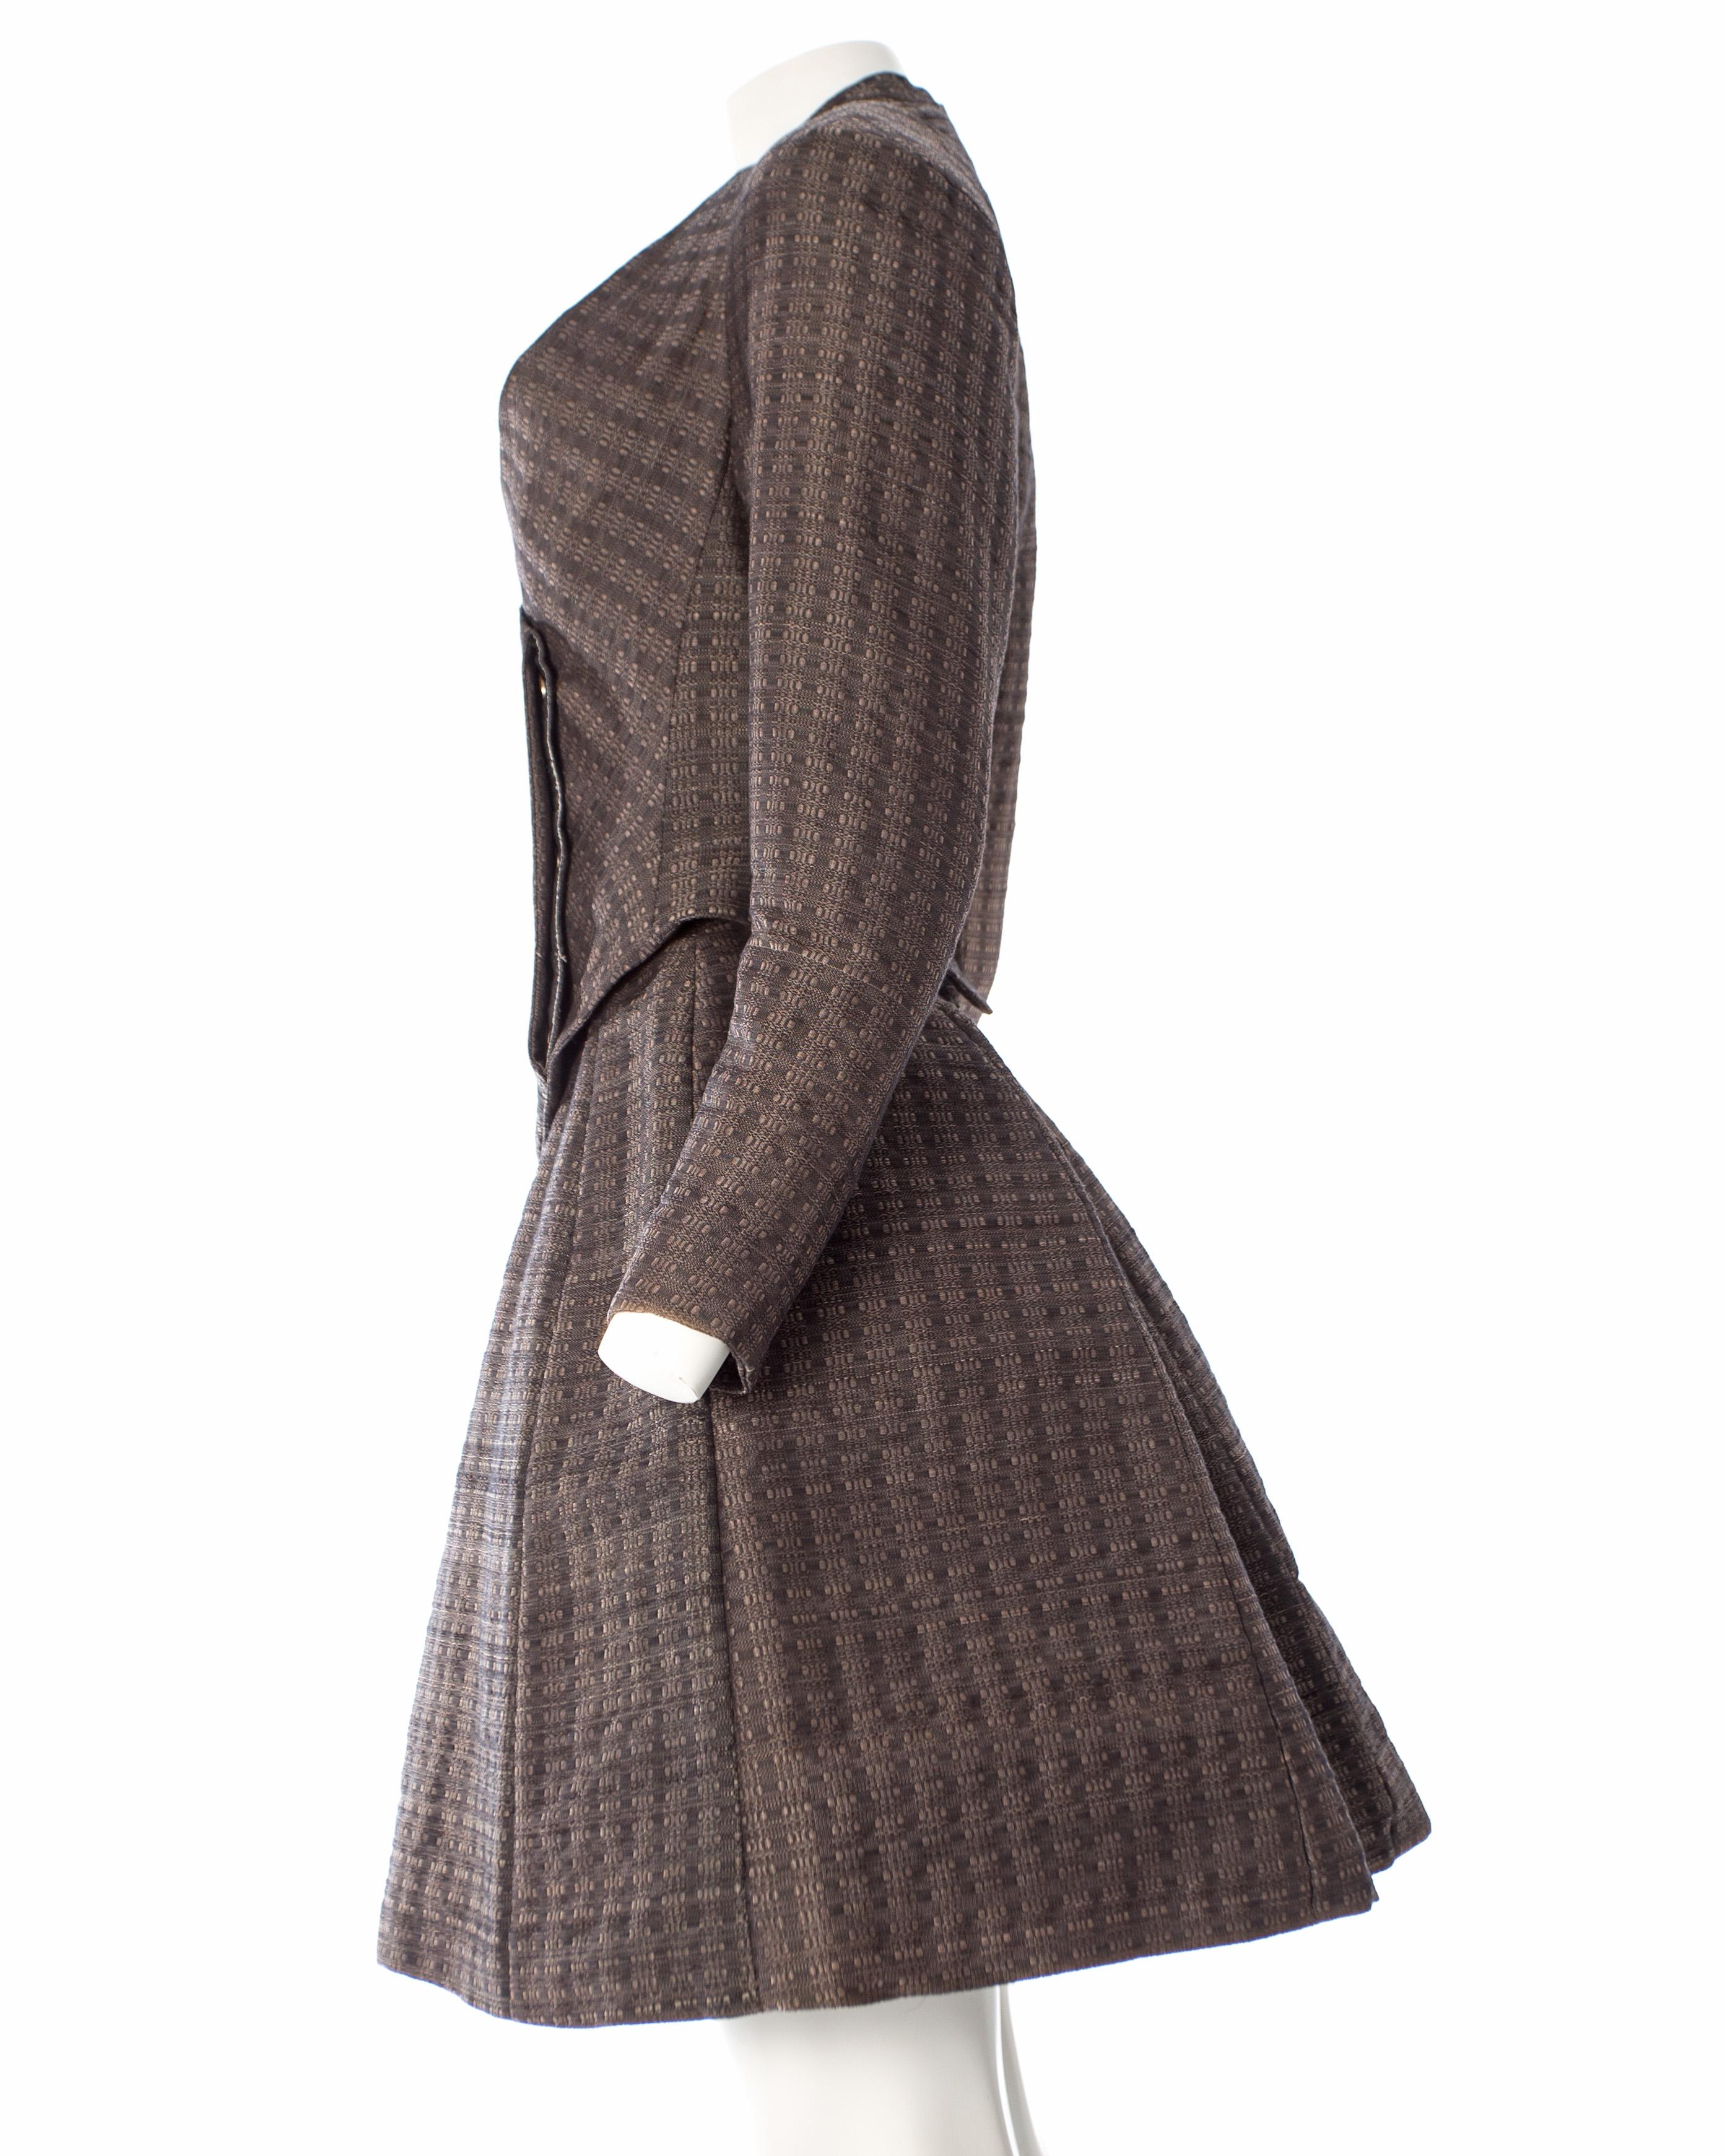 Vivienne Westwood mauve brocade structured skirt suit, fw 1997  1